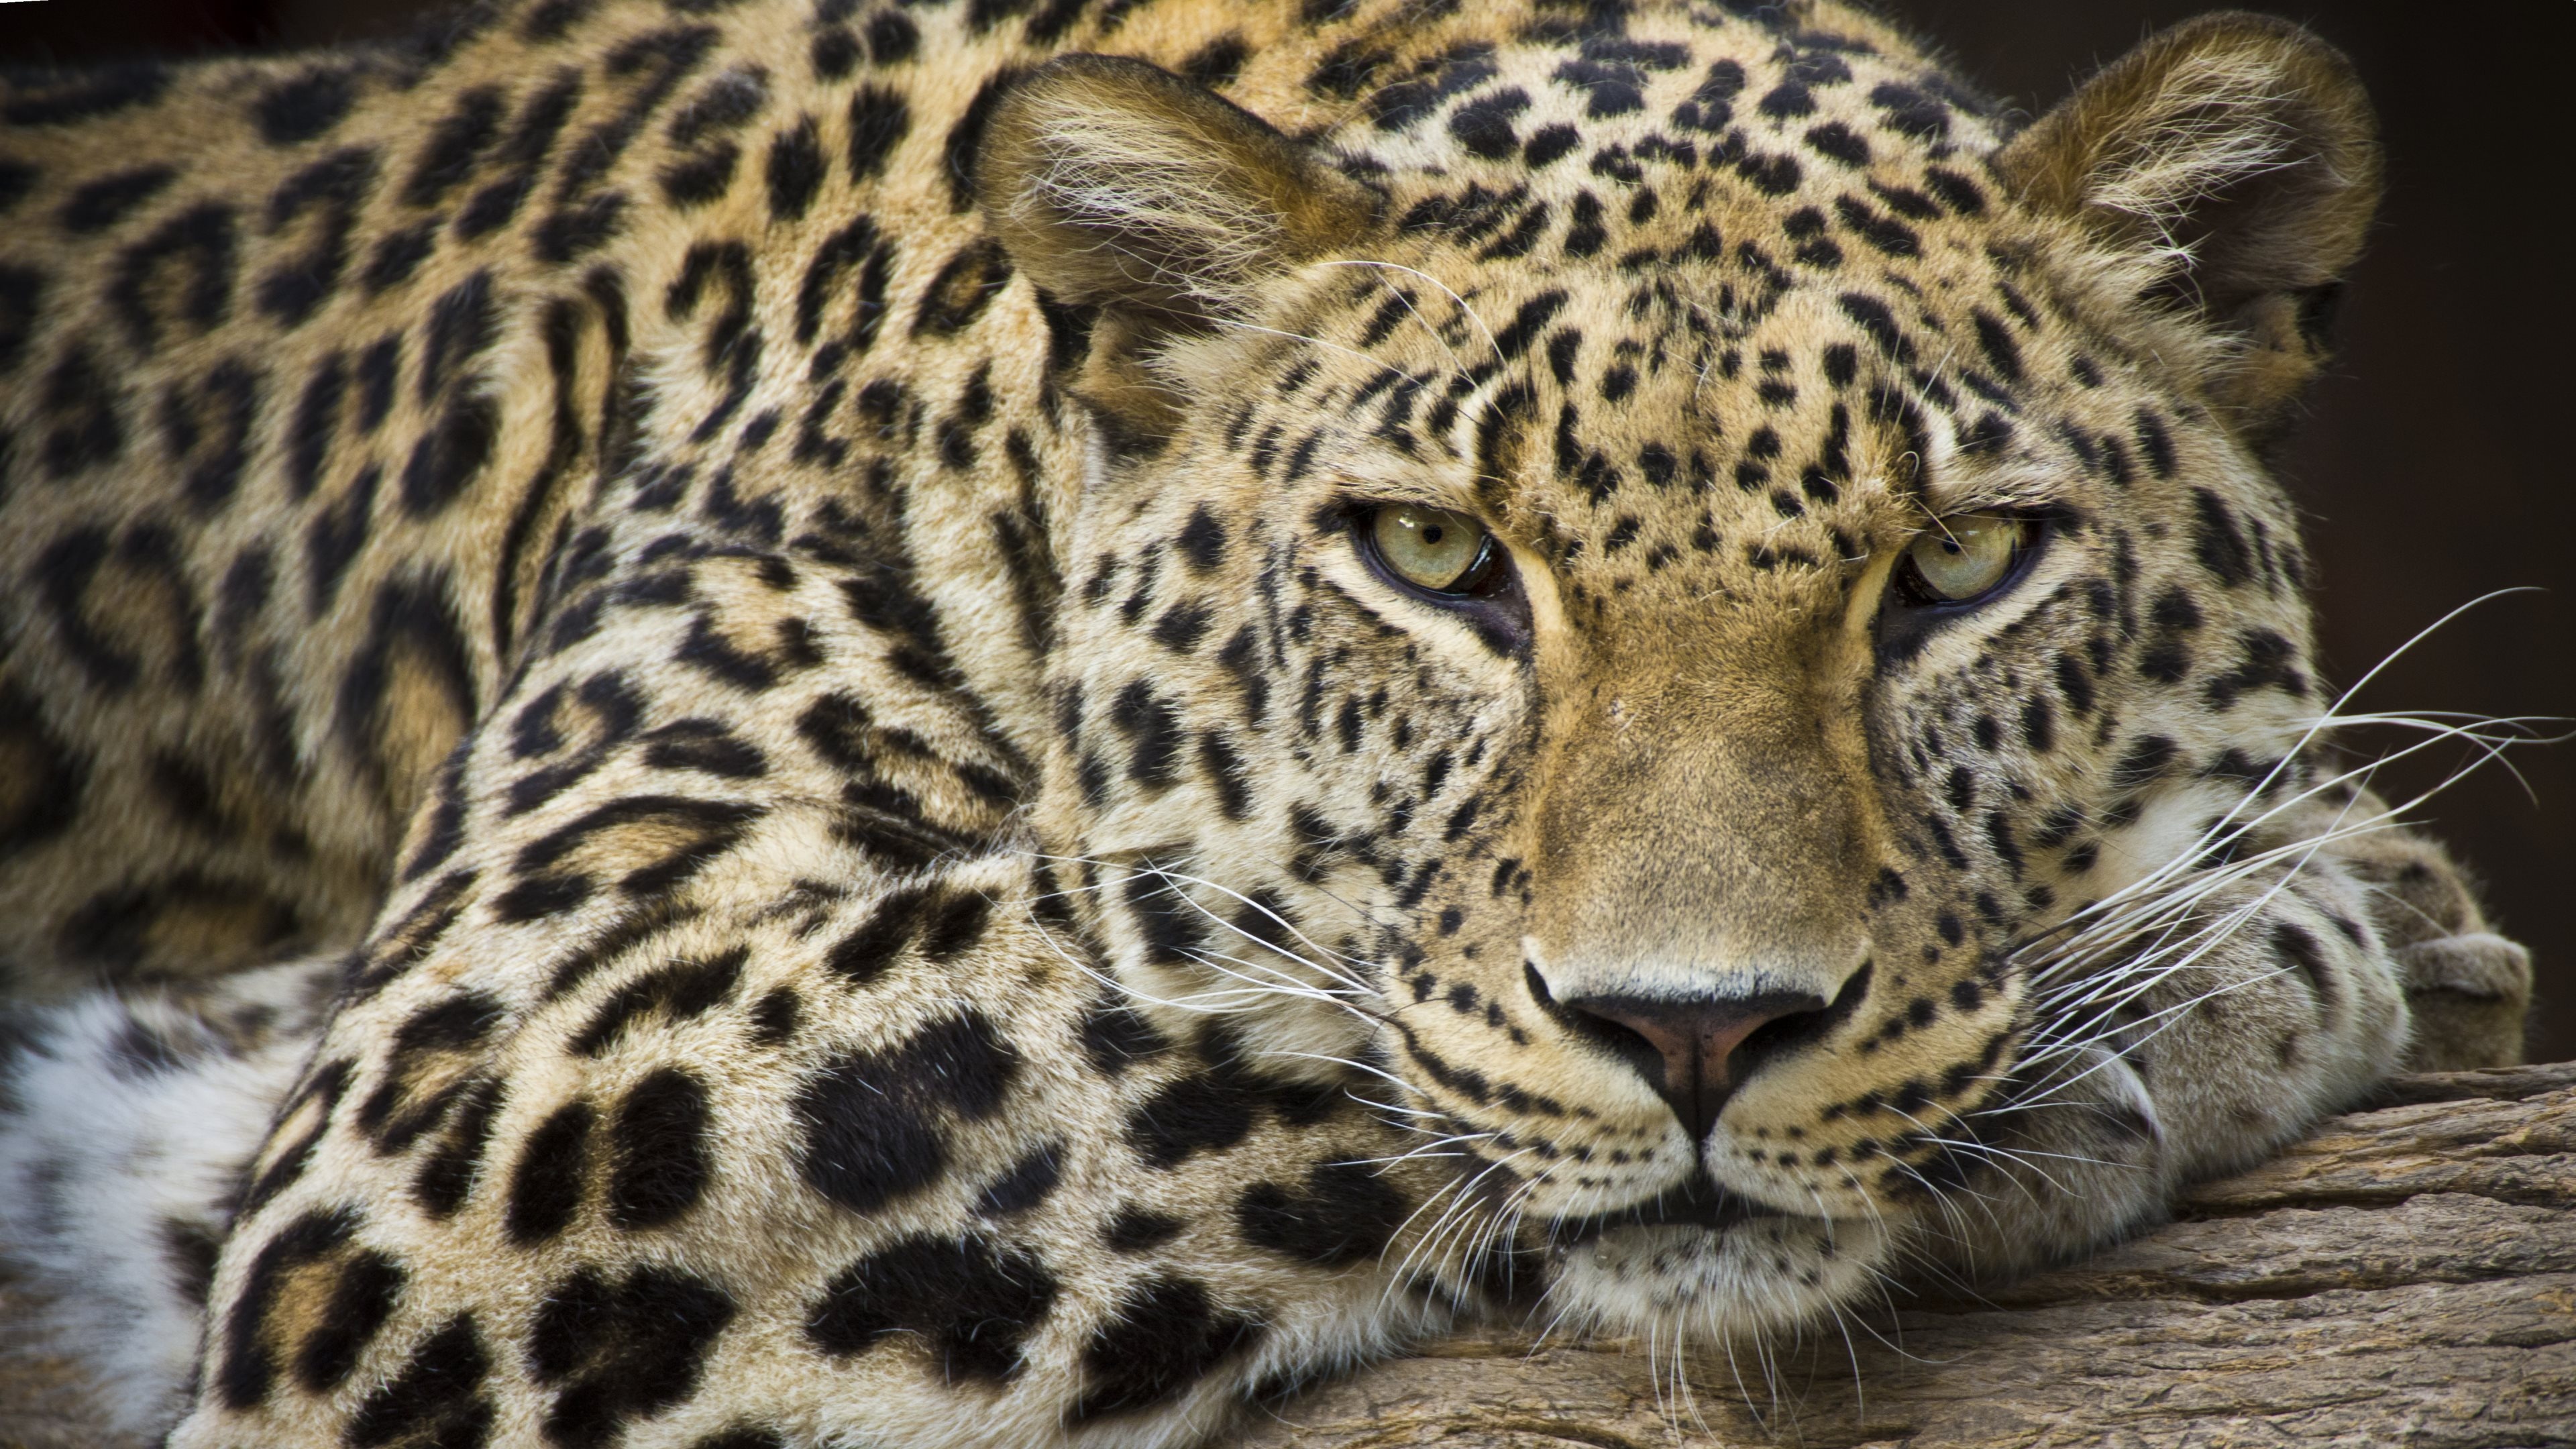 Leopard, 110 4K leopard, Wallpapers background images, 3840x2160 4K Desktop